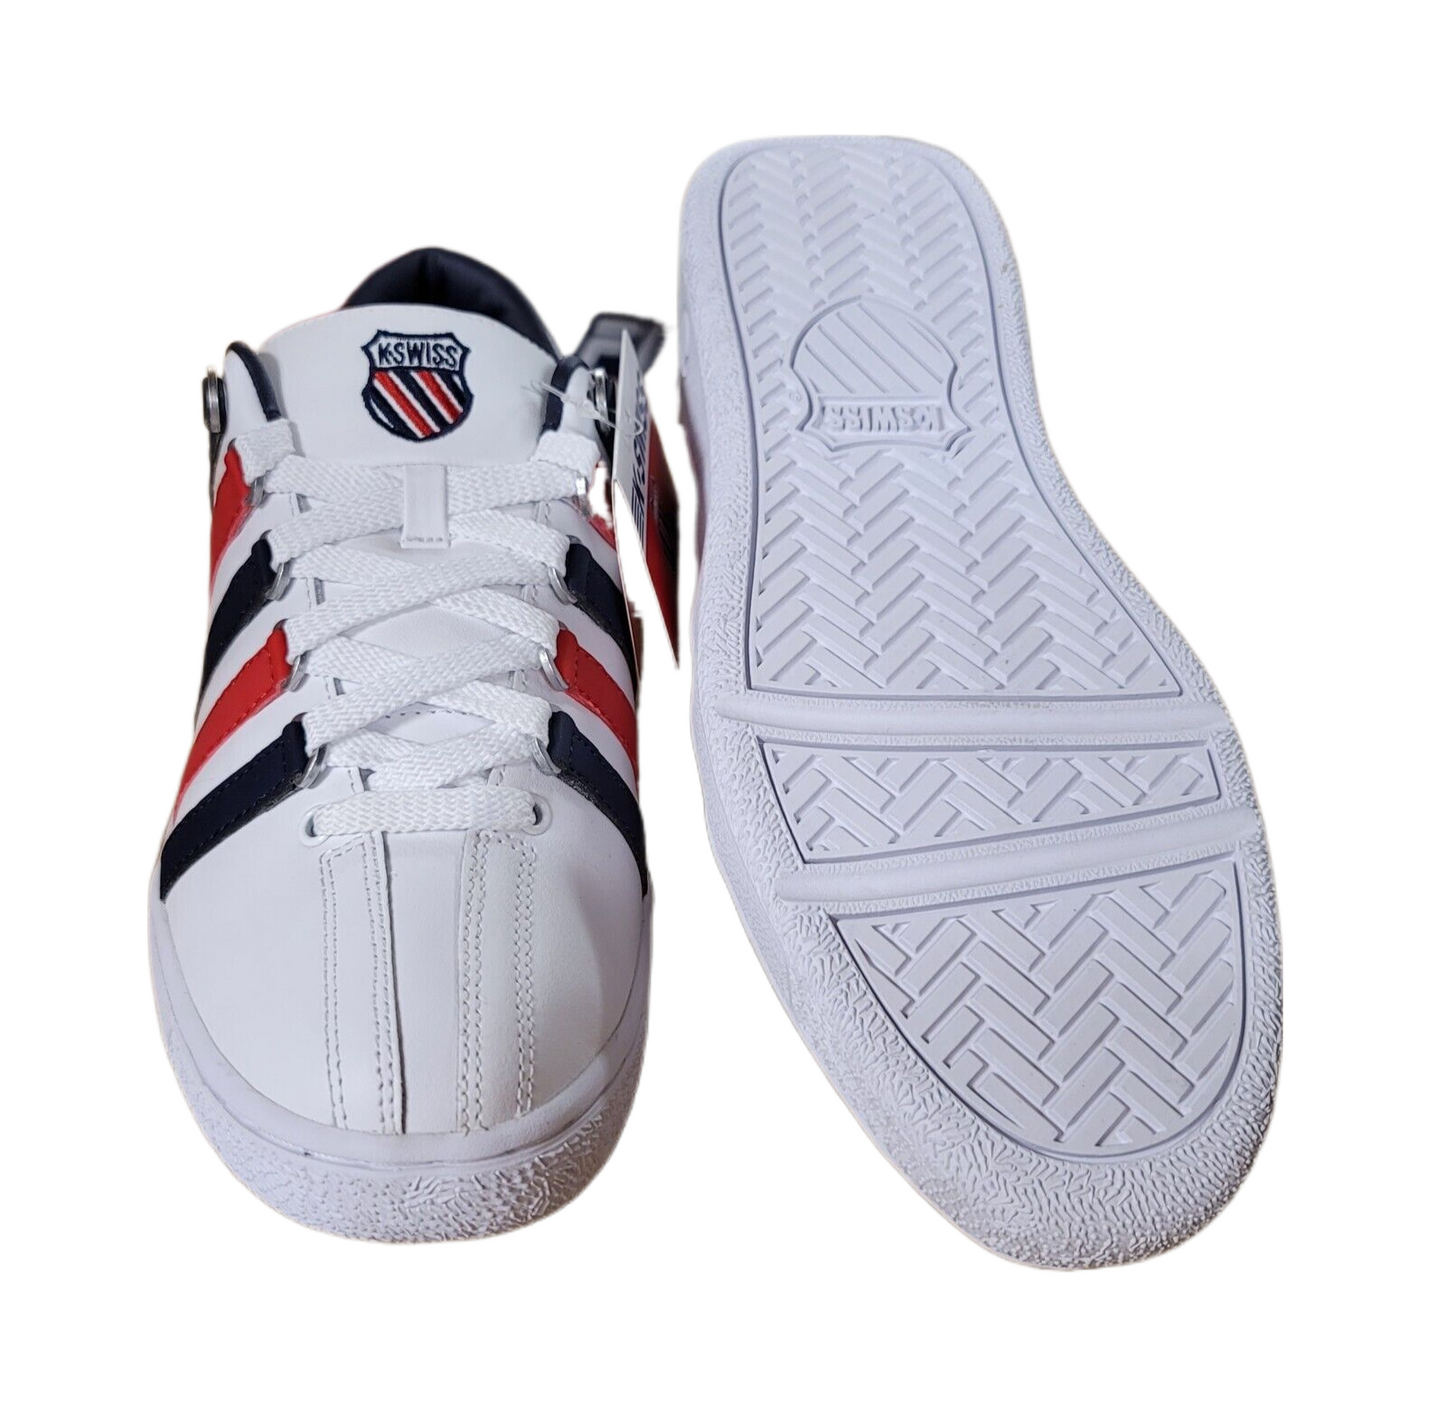 K-Swiss Men's Classic 2000 Medium Low Top Shoes White / Red / Blue 06506-113-M